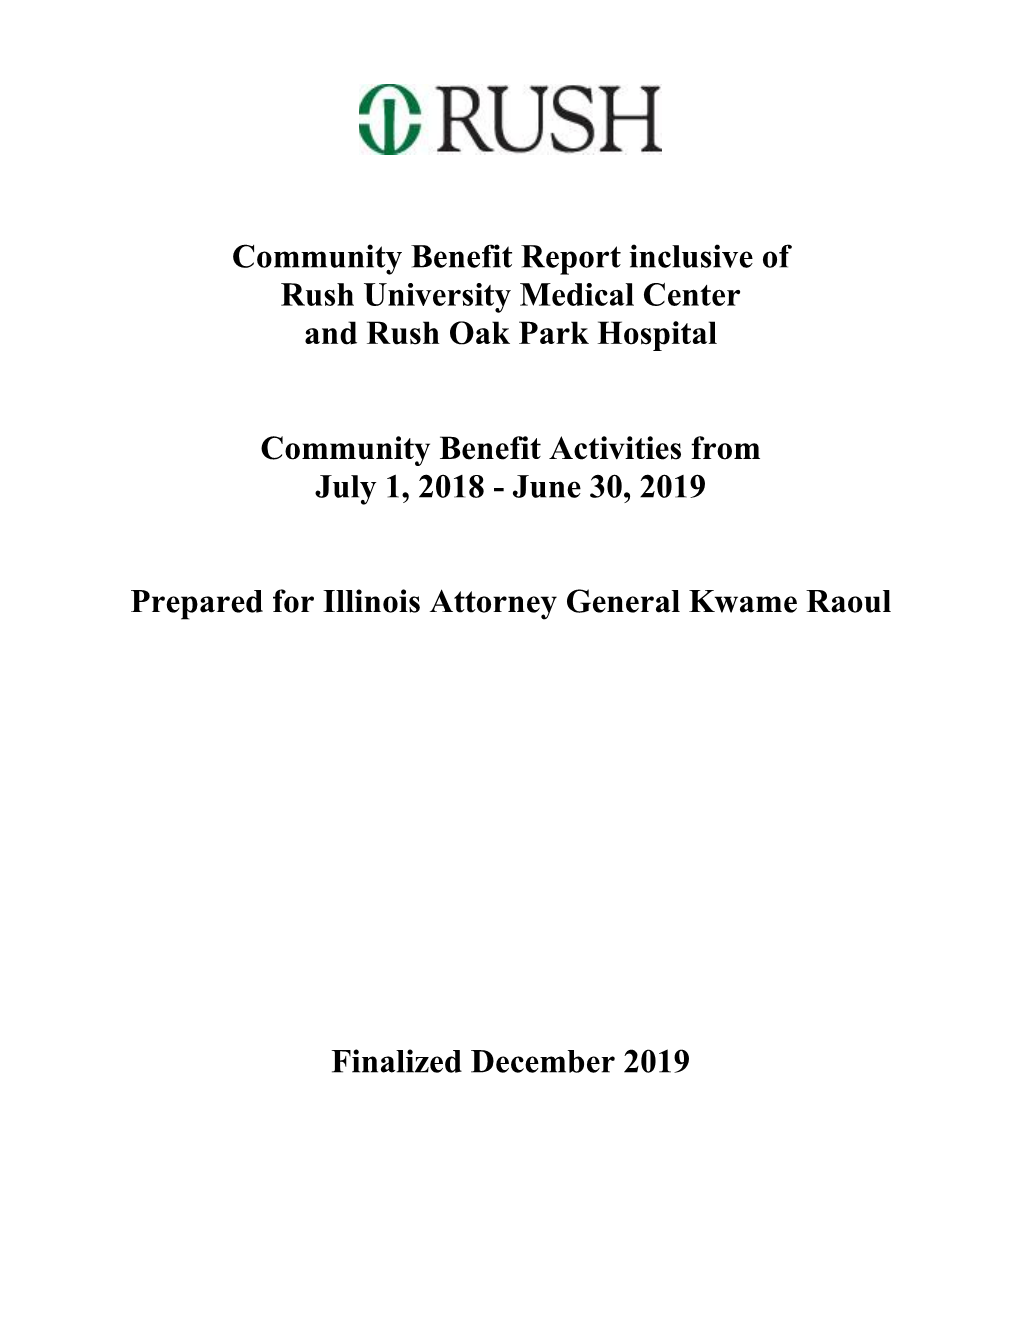 Community Benefit Report FY2019